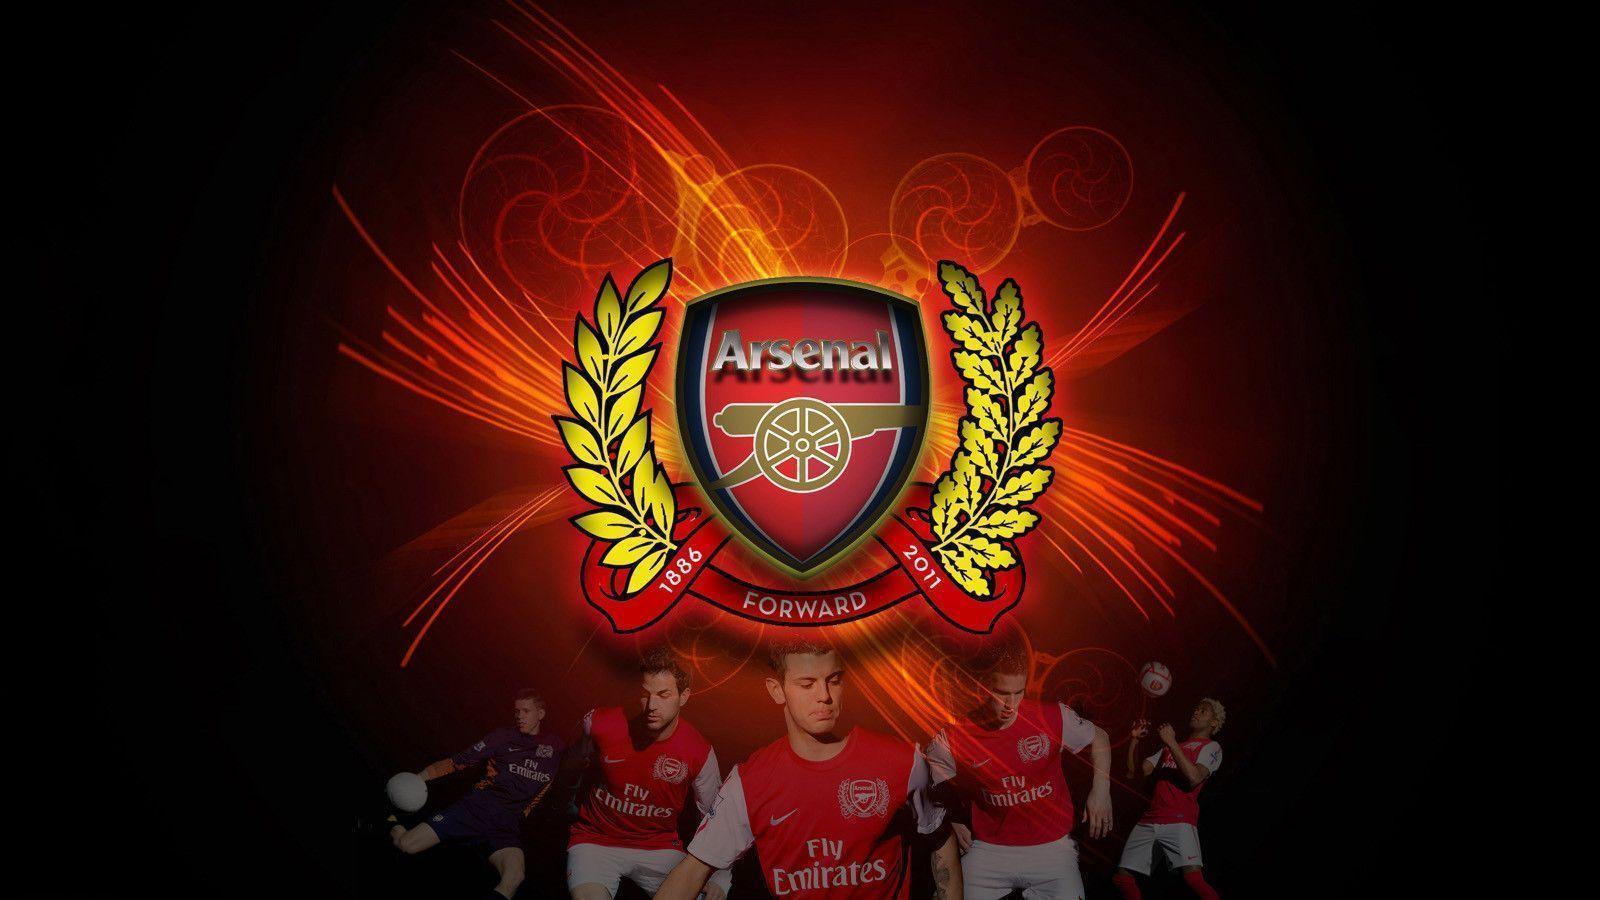 Amazing Arsenal Logo Wallpaper